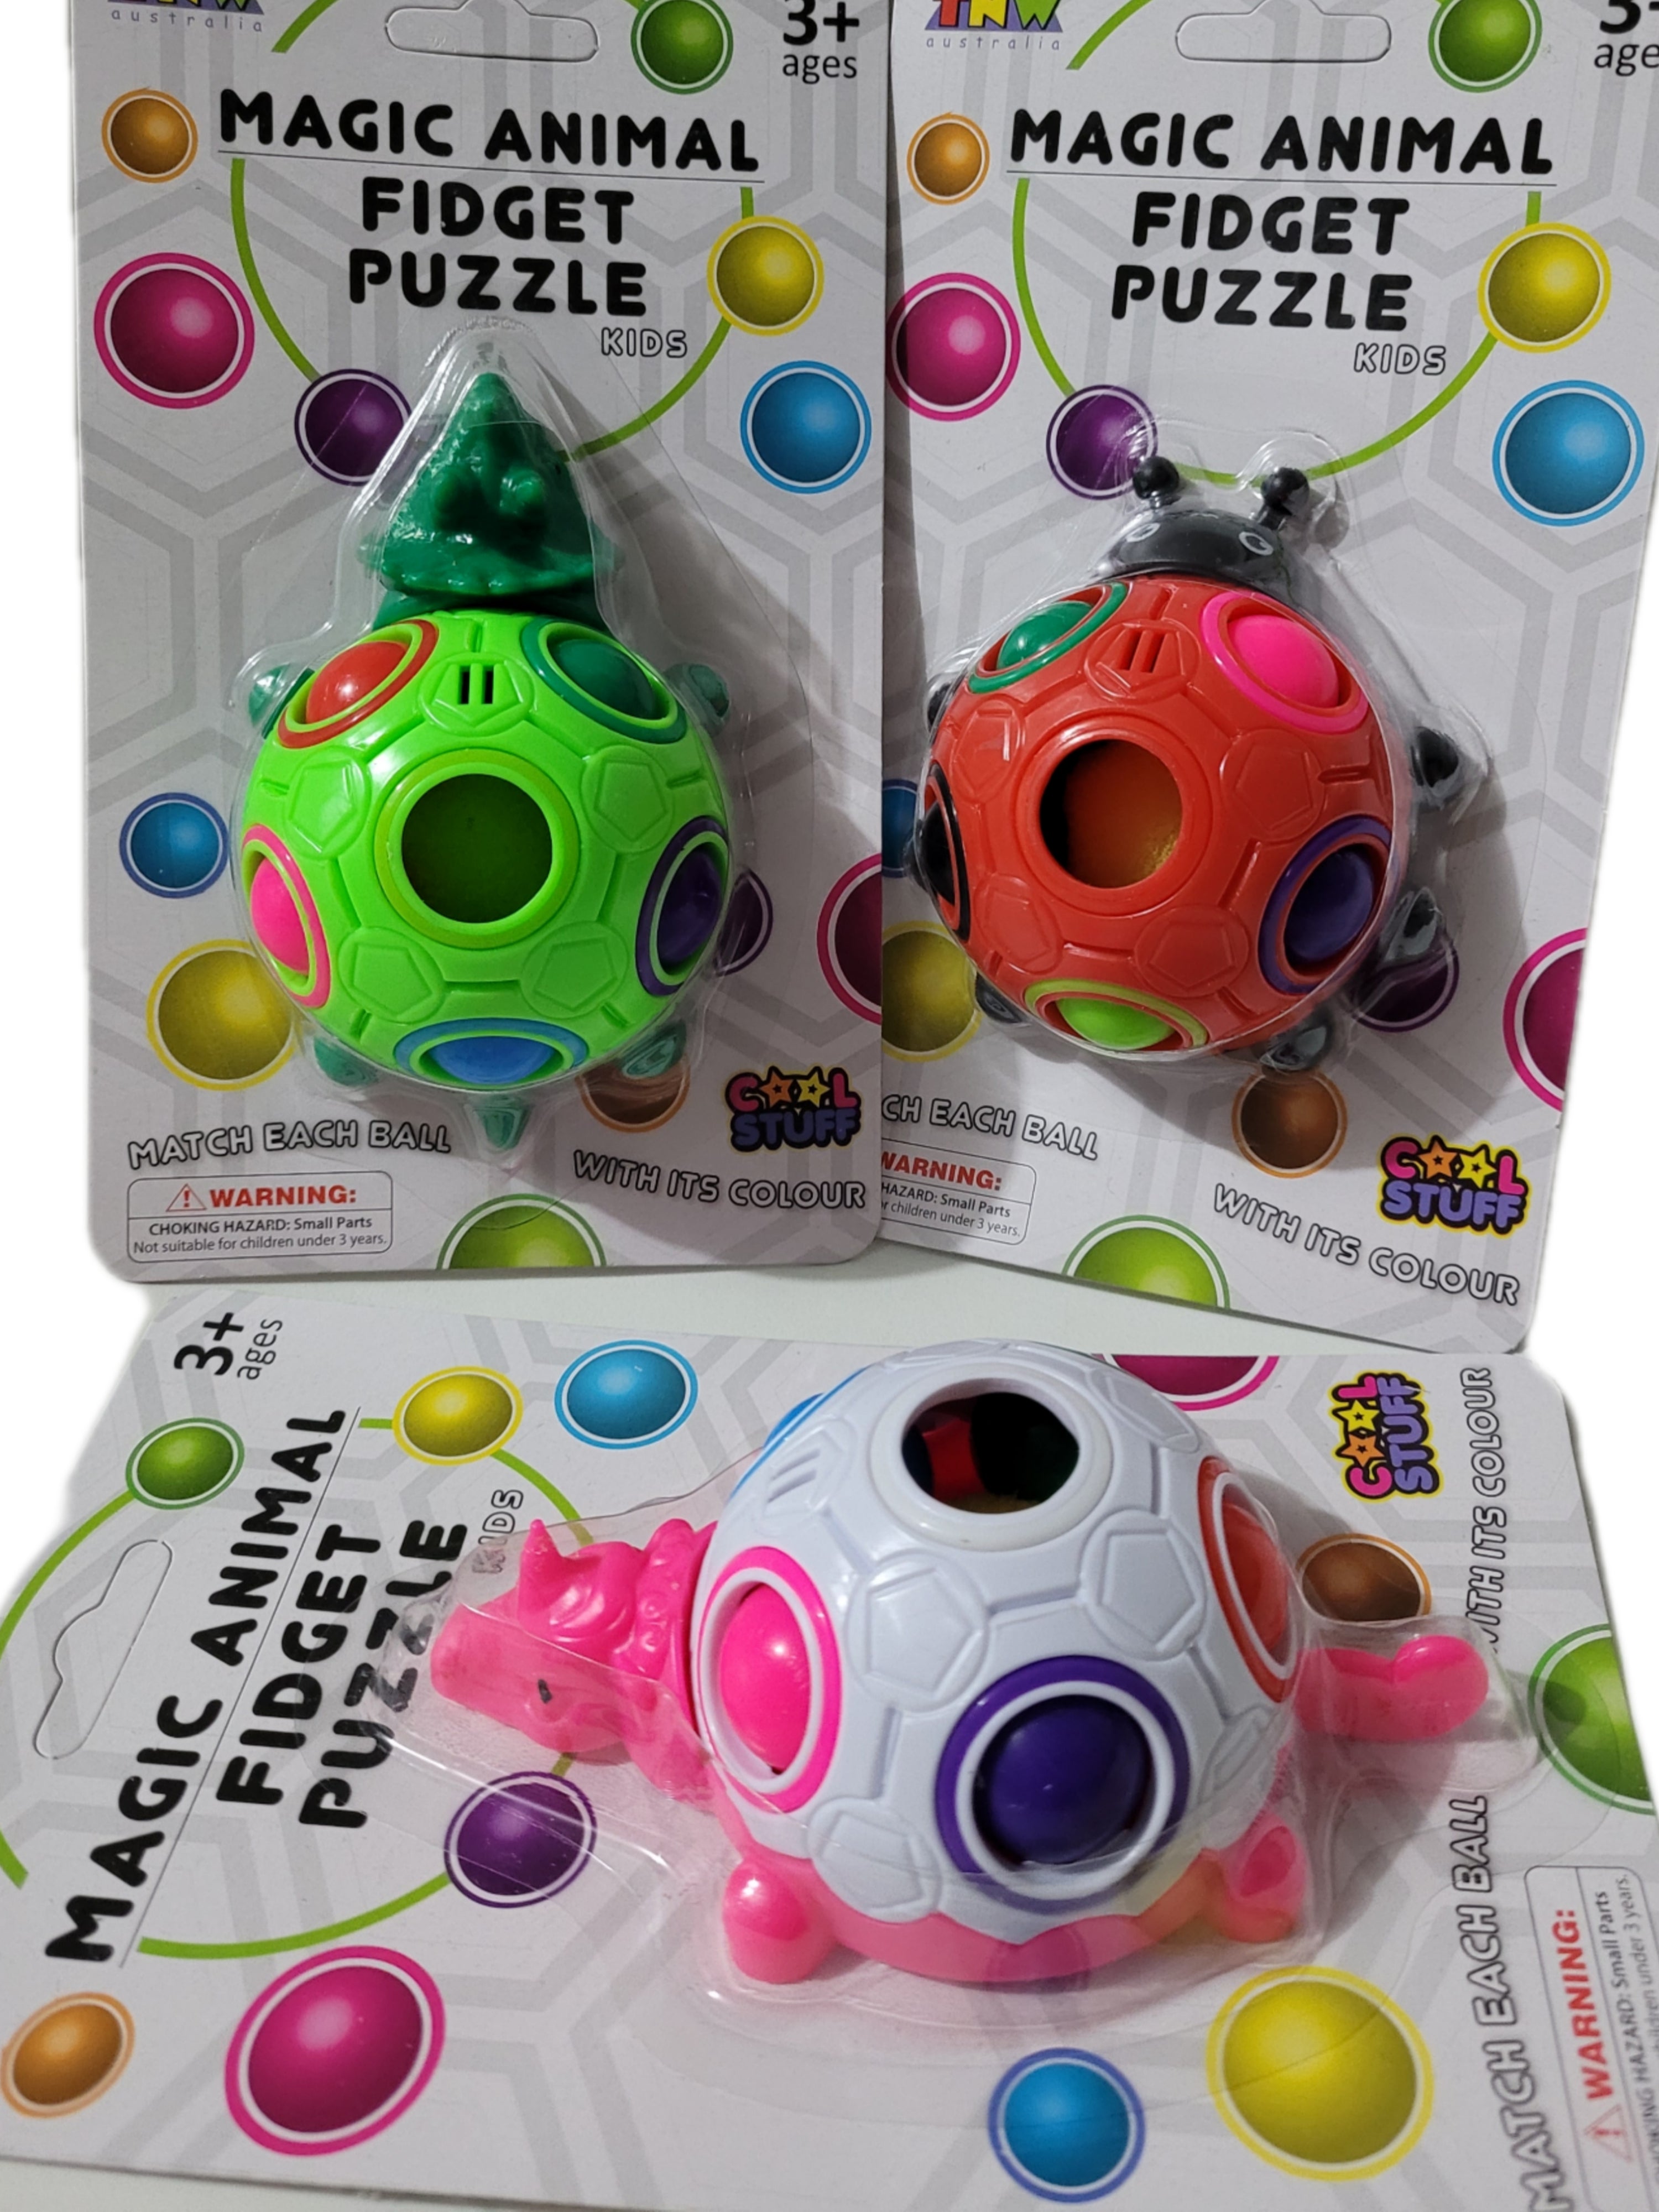 Puzzle ball fidget